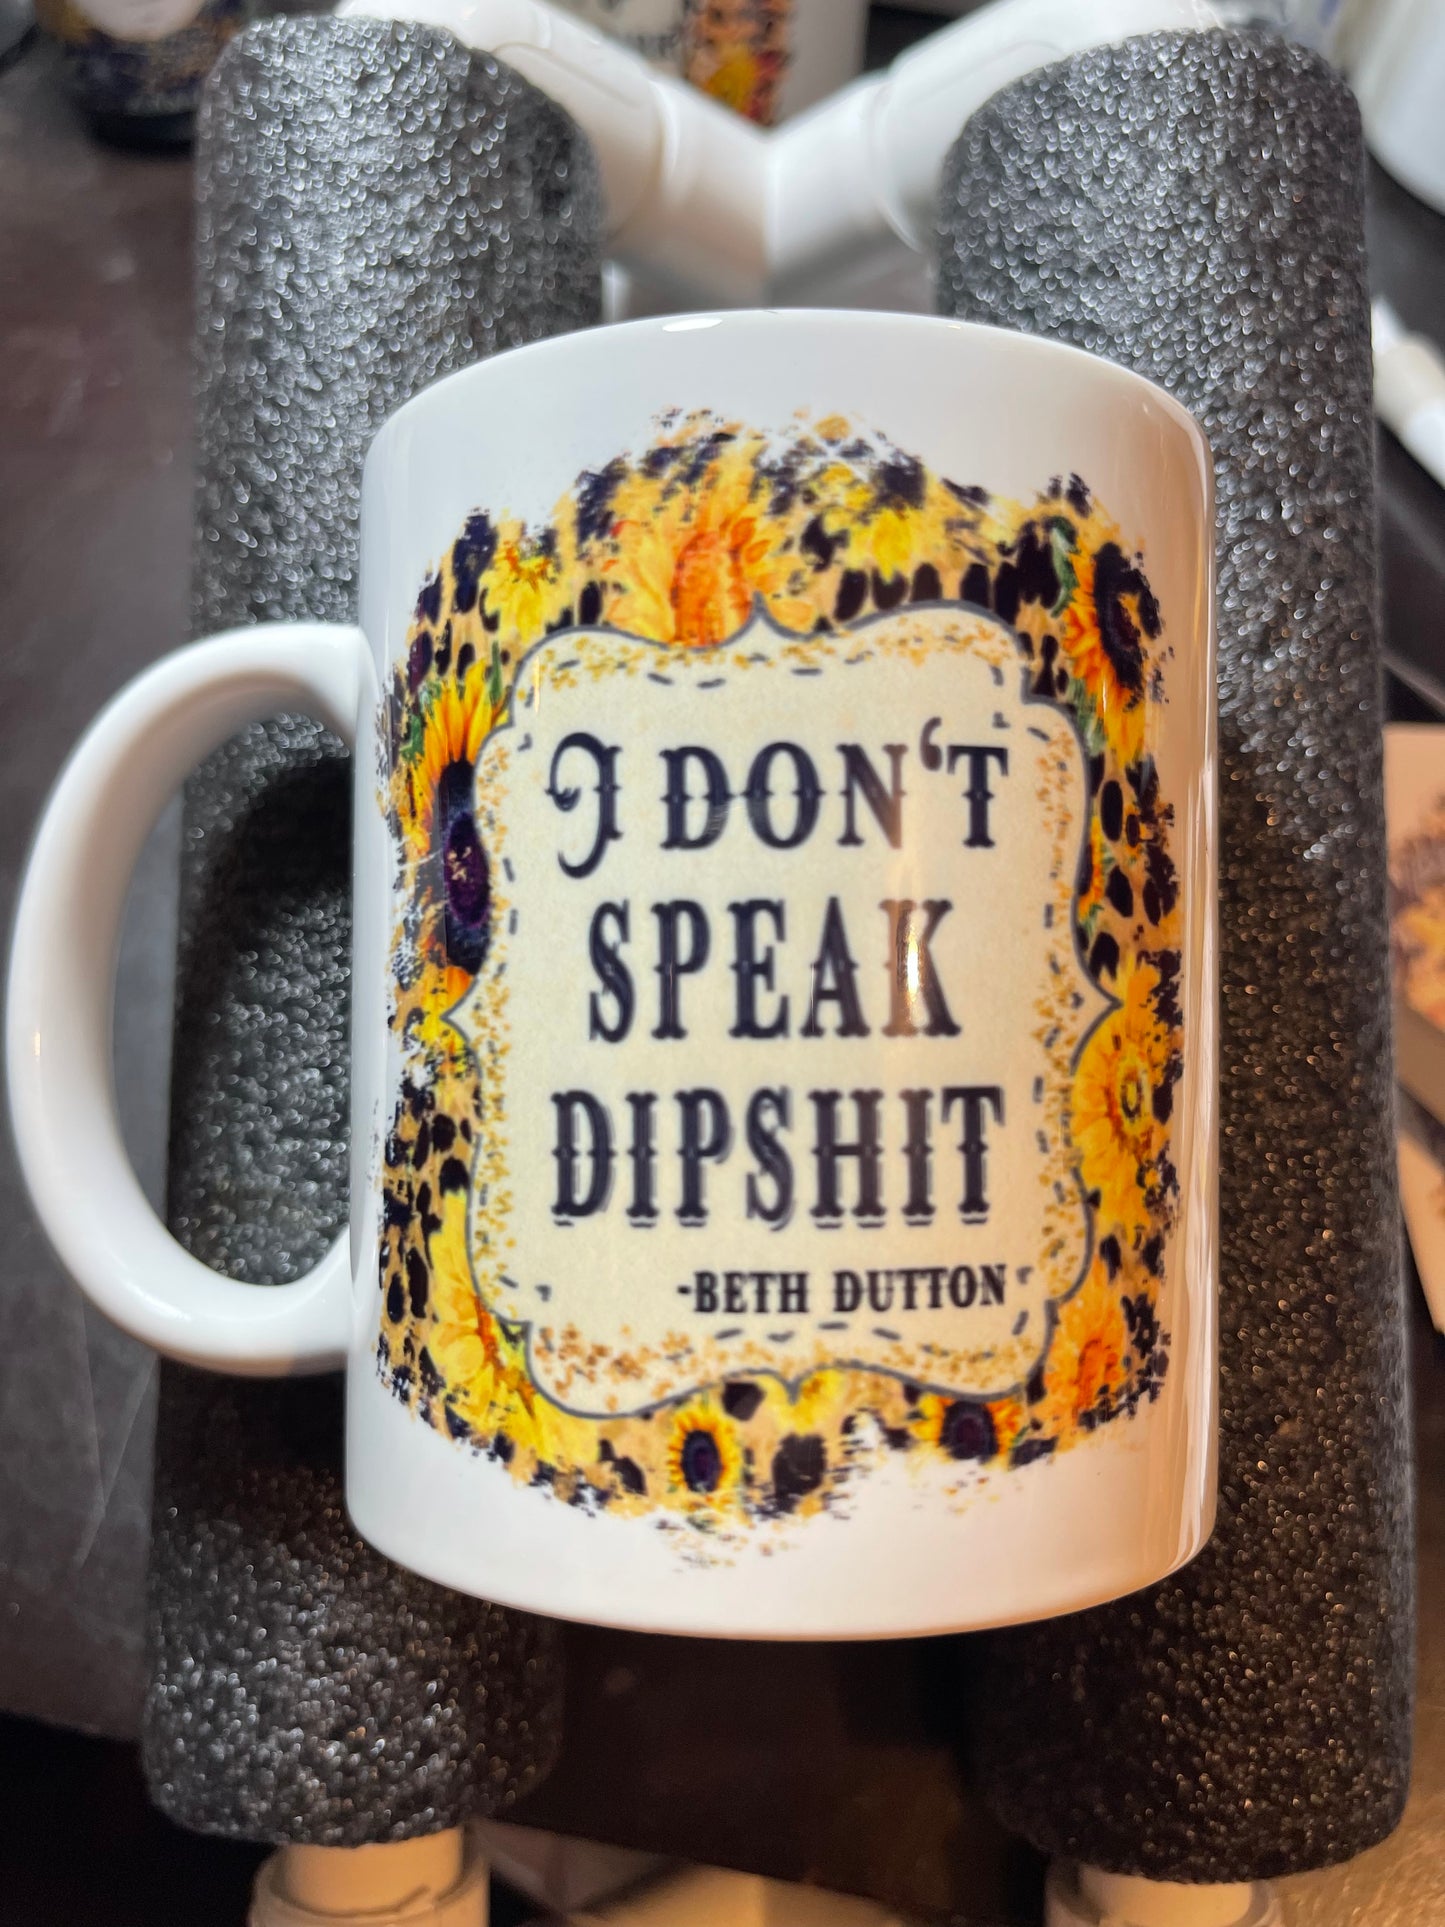 I don’t speak dipshit